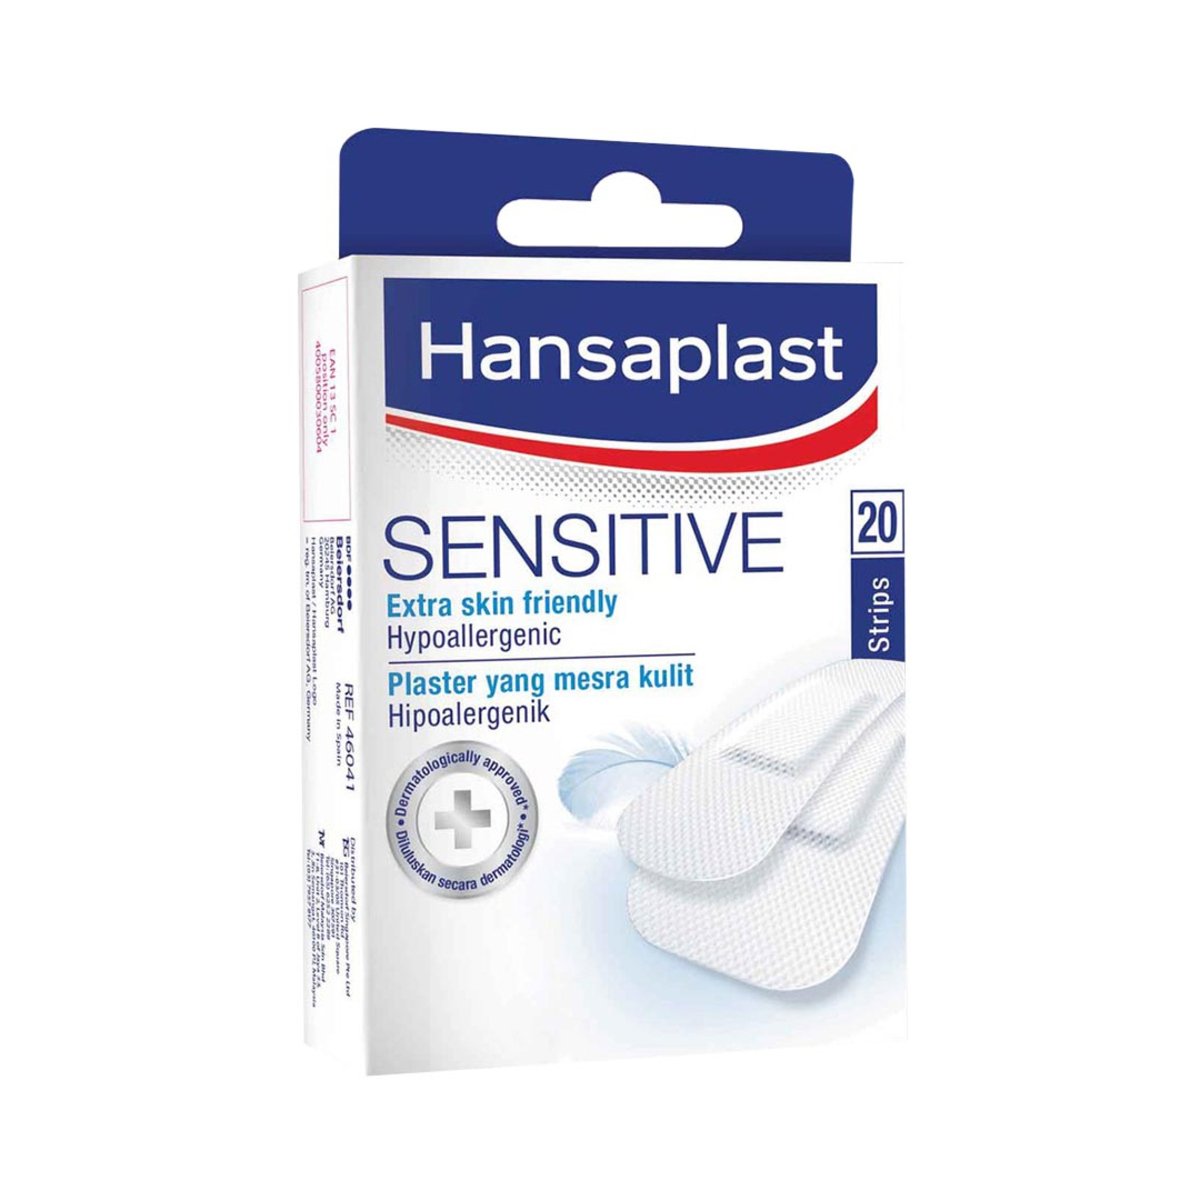 Hansaplast Sensitive Extra Skin Friendly Hypoallergenic 20 Strips